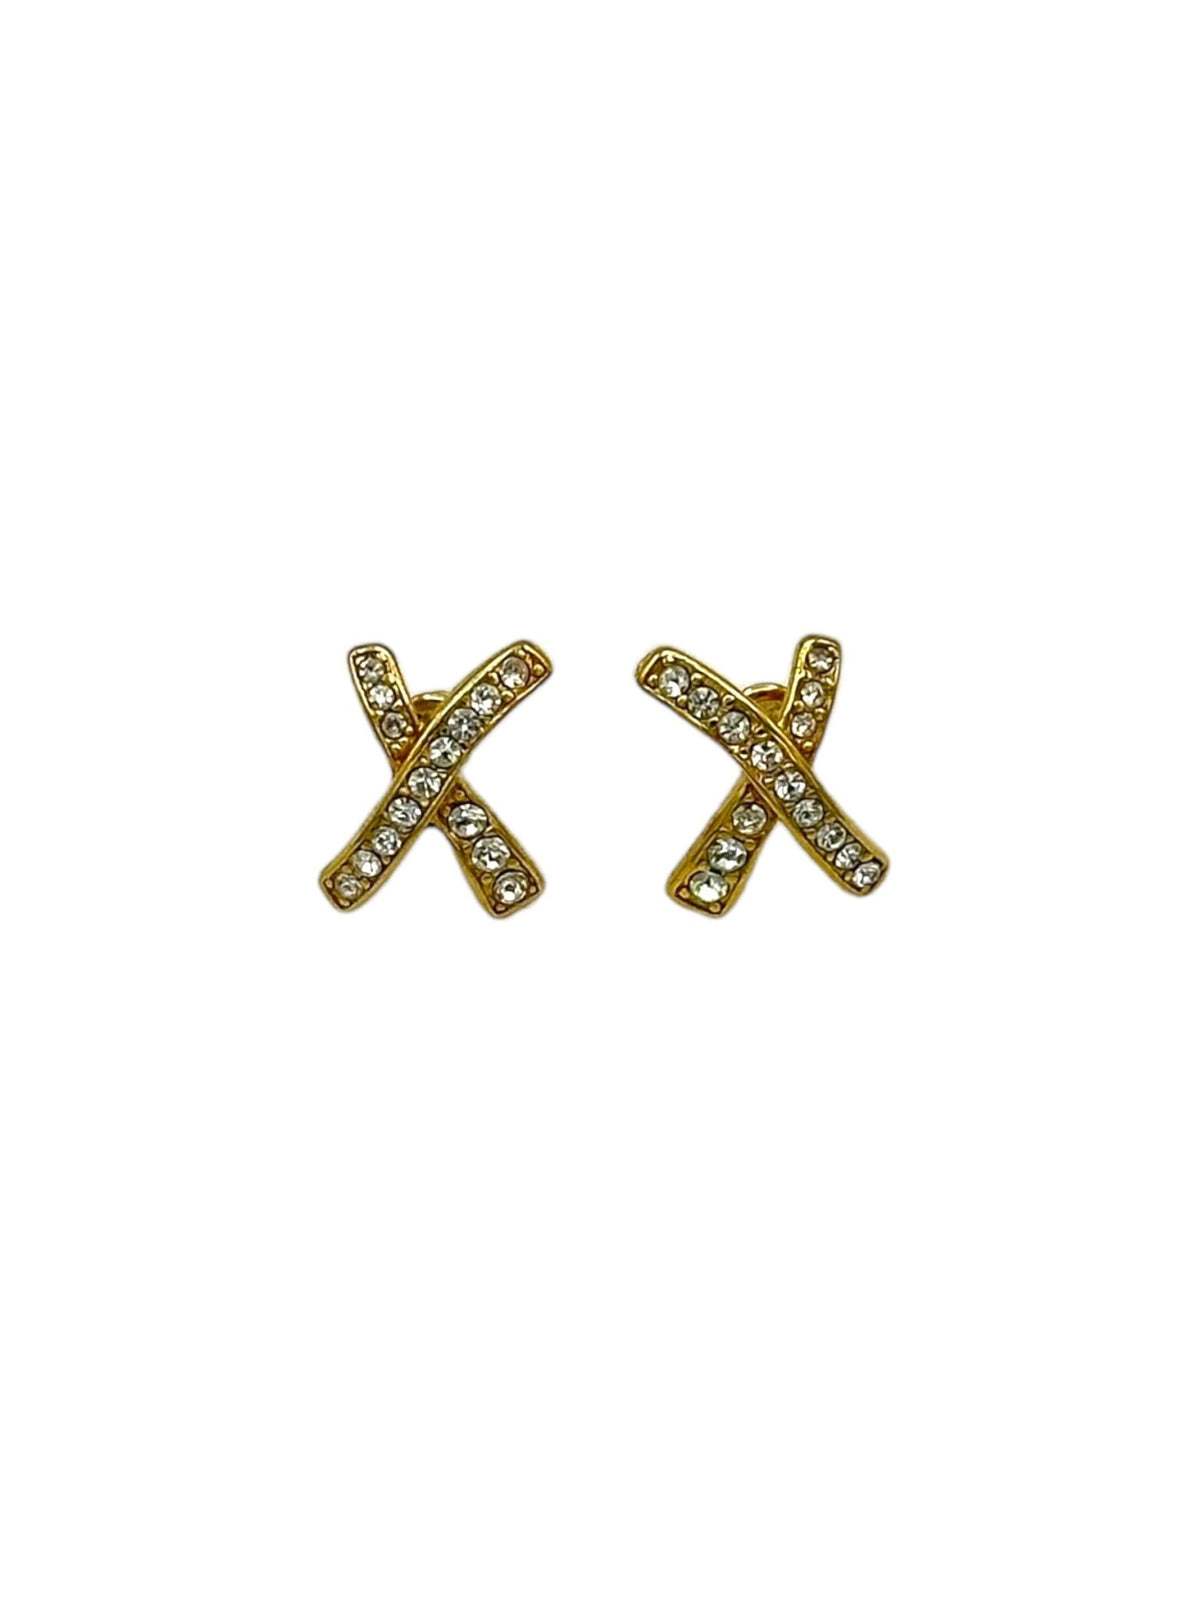 Monet Classic Gold X Rhinestone Pierced Earrings - 24 Wishes Vintage Jewelry